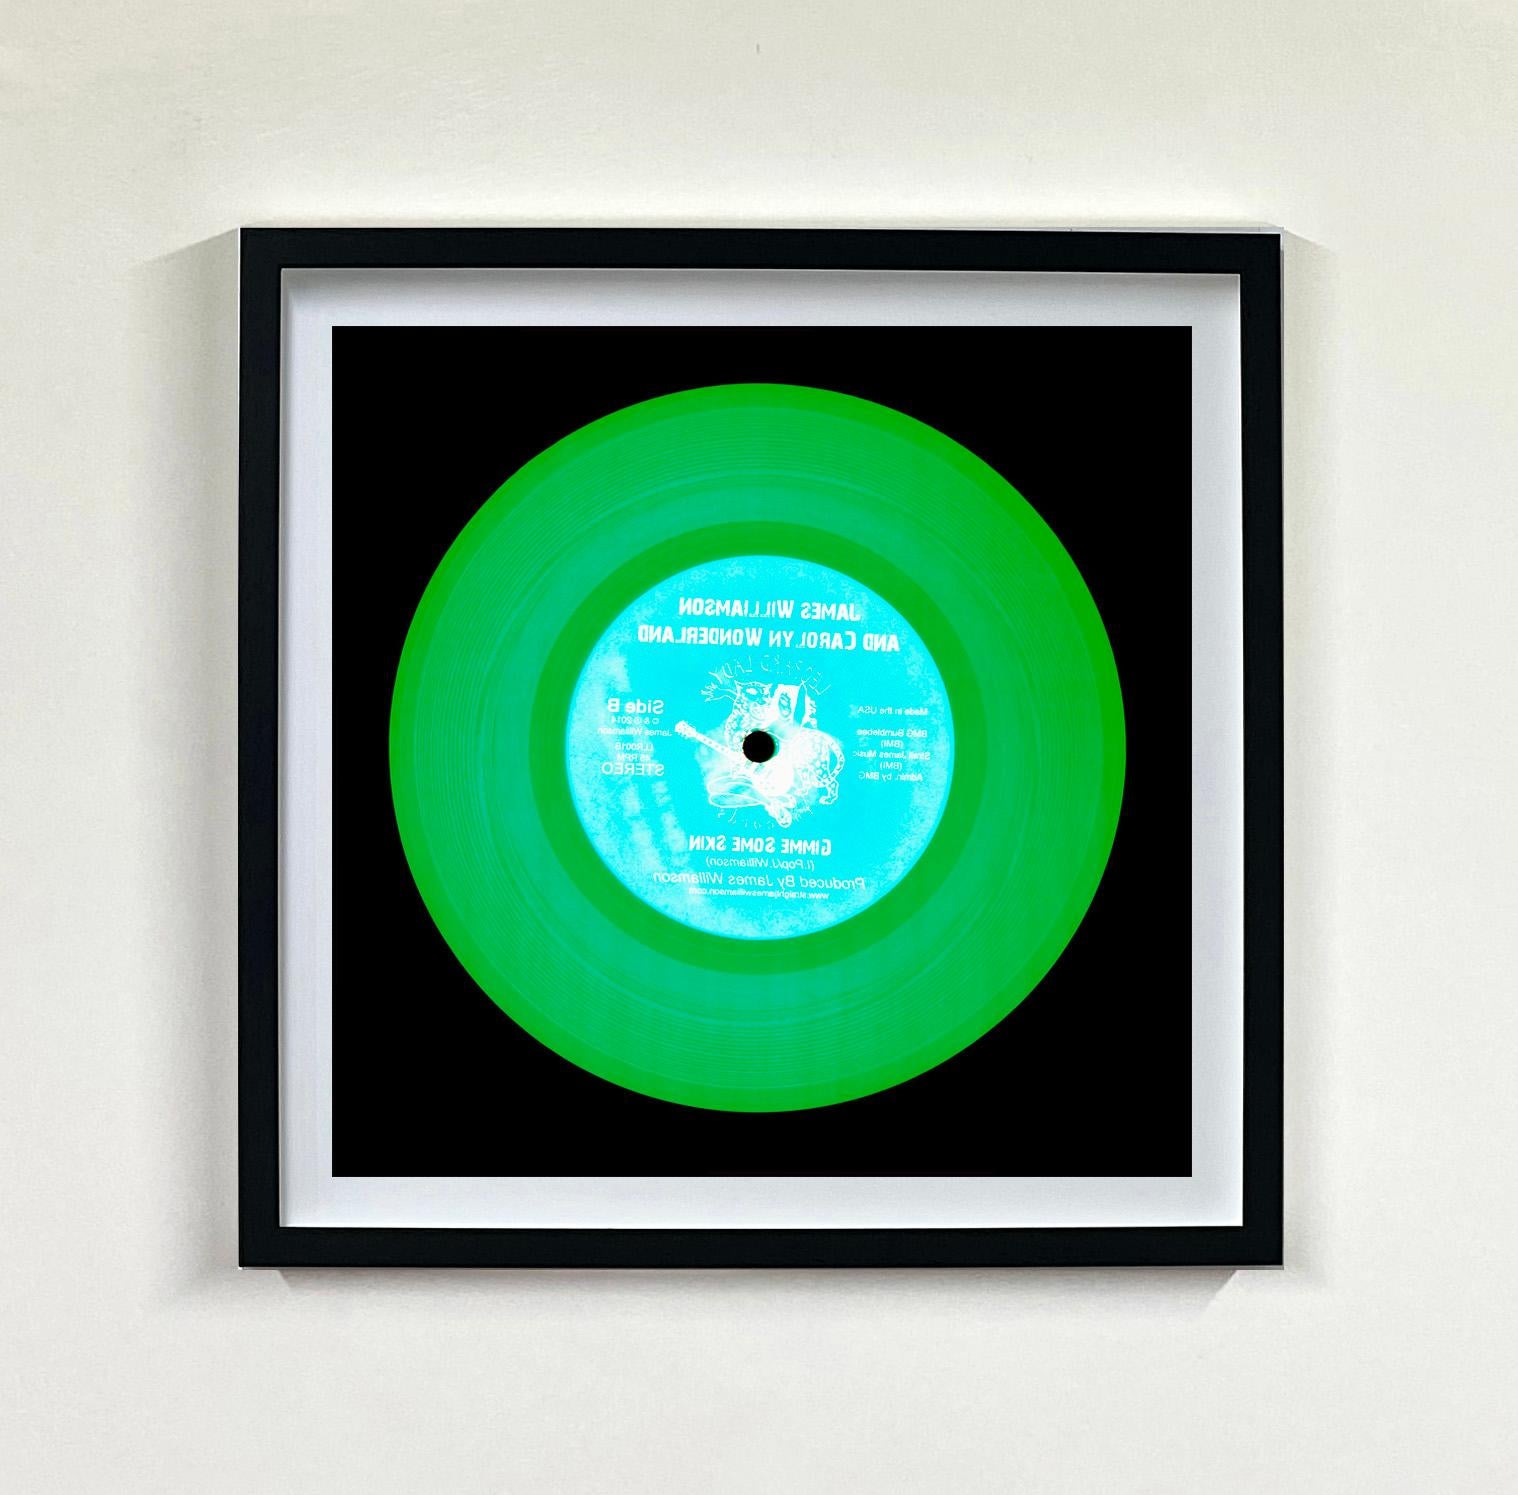 Vinyl Collection Nine Piece Multicolor Installation - Multicolor Pop Art Photo - Photograph by Heidler & Heeps